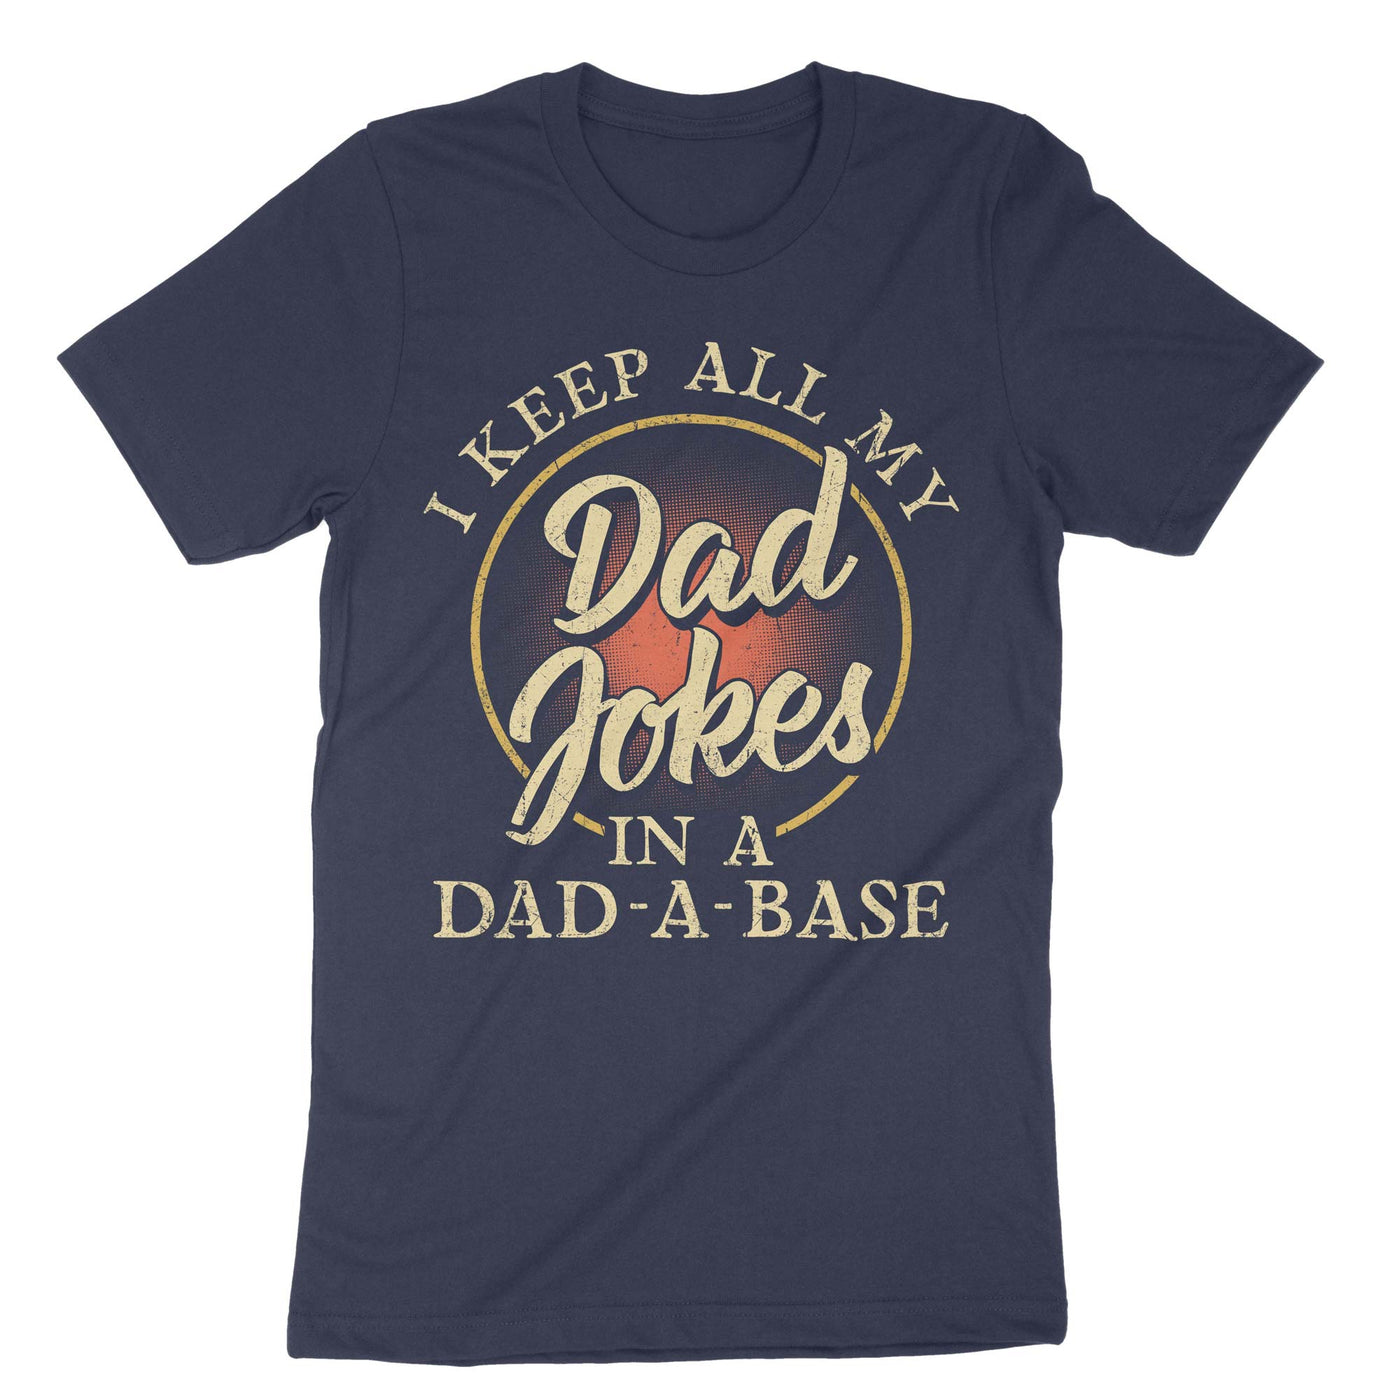 Navy I Keep All My Dad Jokes In A Dad-a-base T-Shirt#color_navy